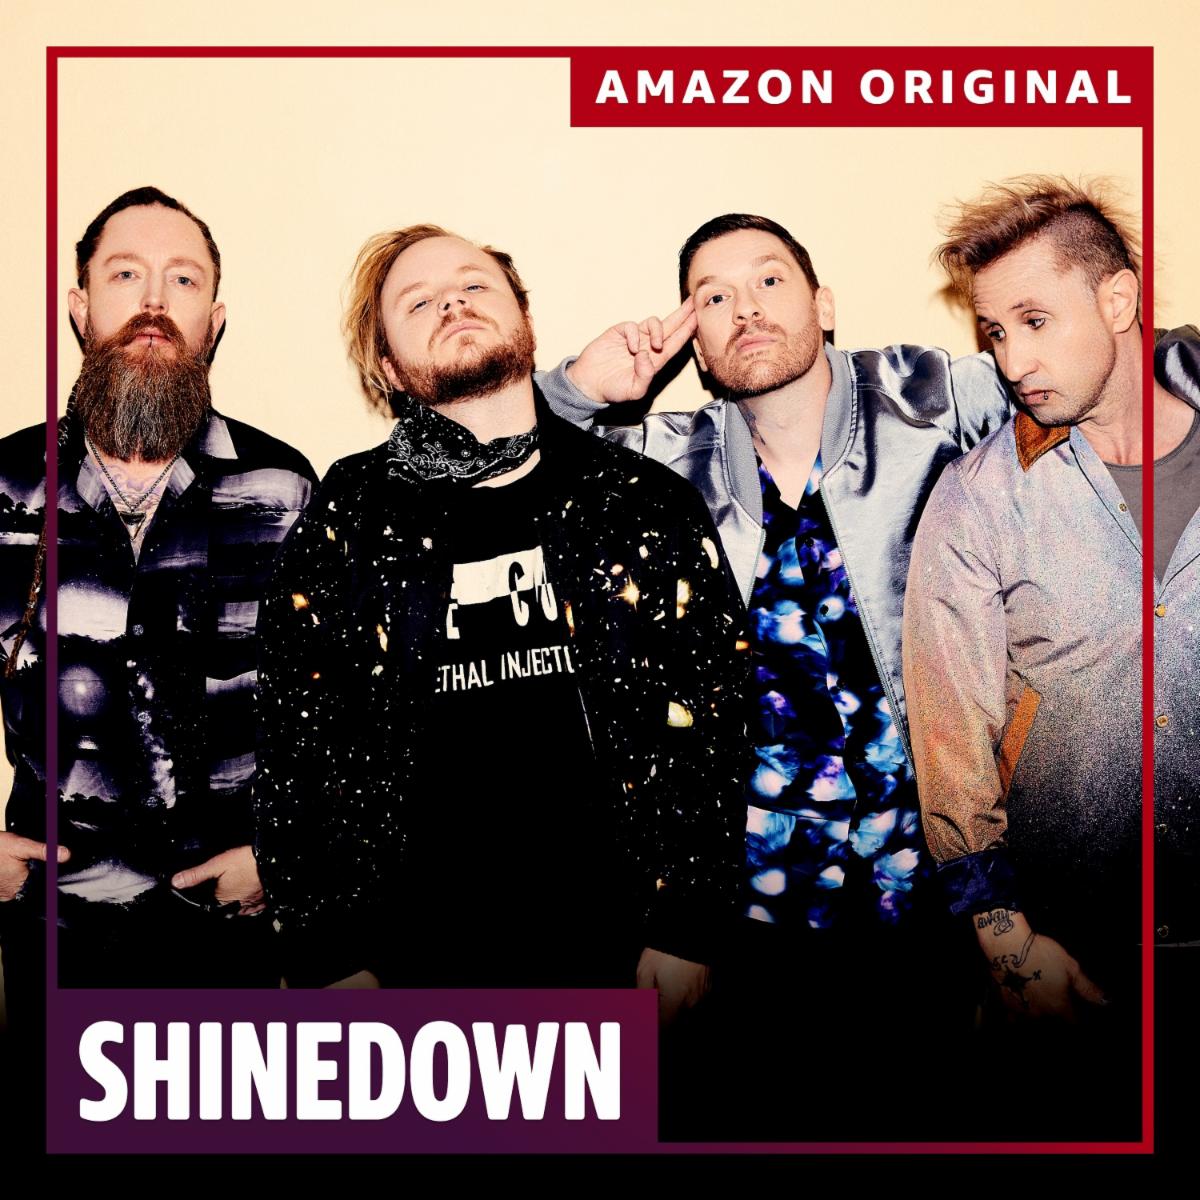 Shinedown Releases Amazon Original Of Hit Single "Daylight"